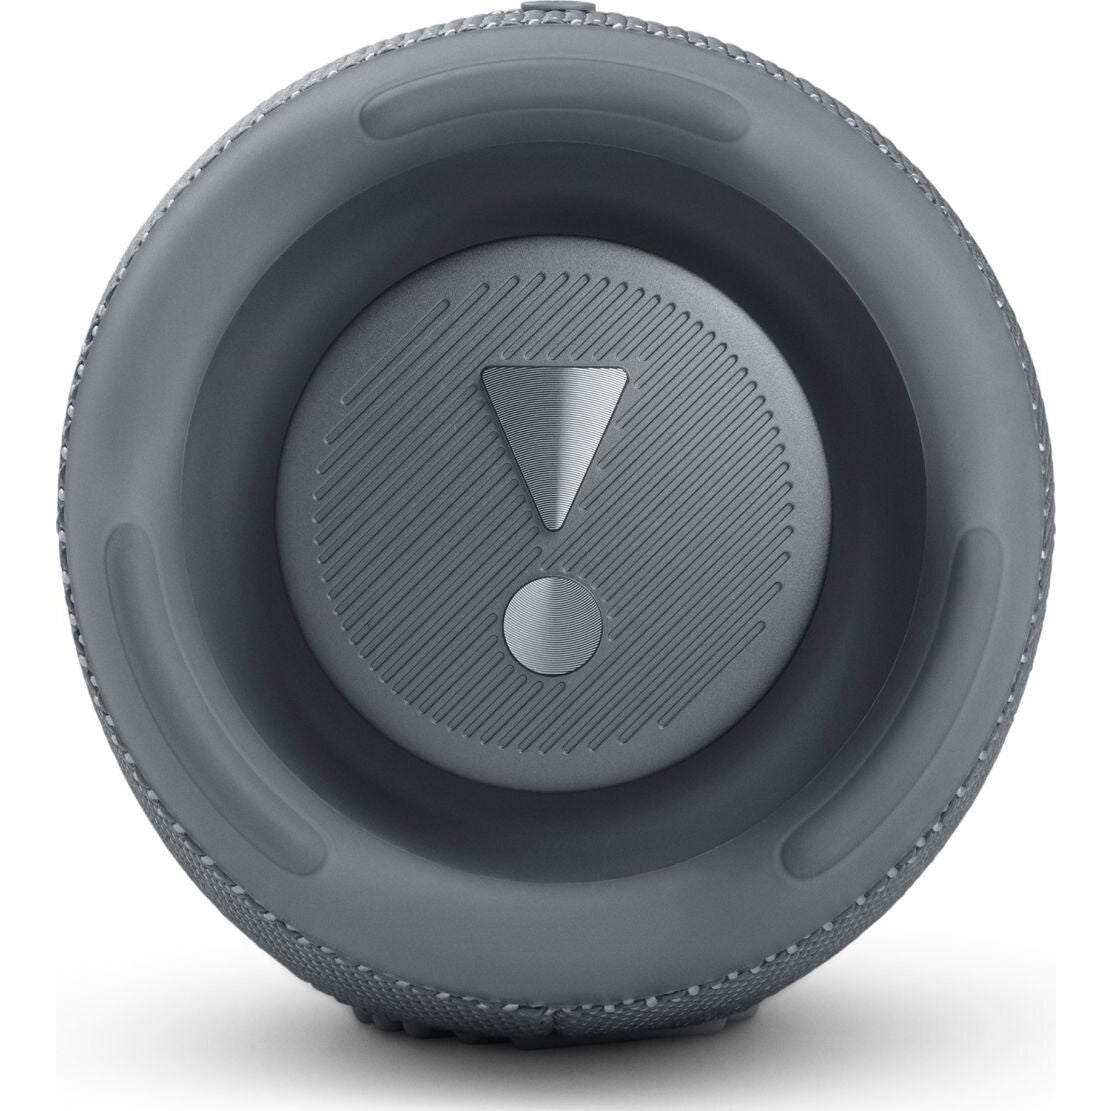 Bluetooth reproduktor JBL Charge 5 Grey